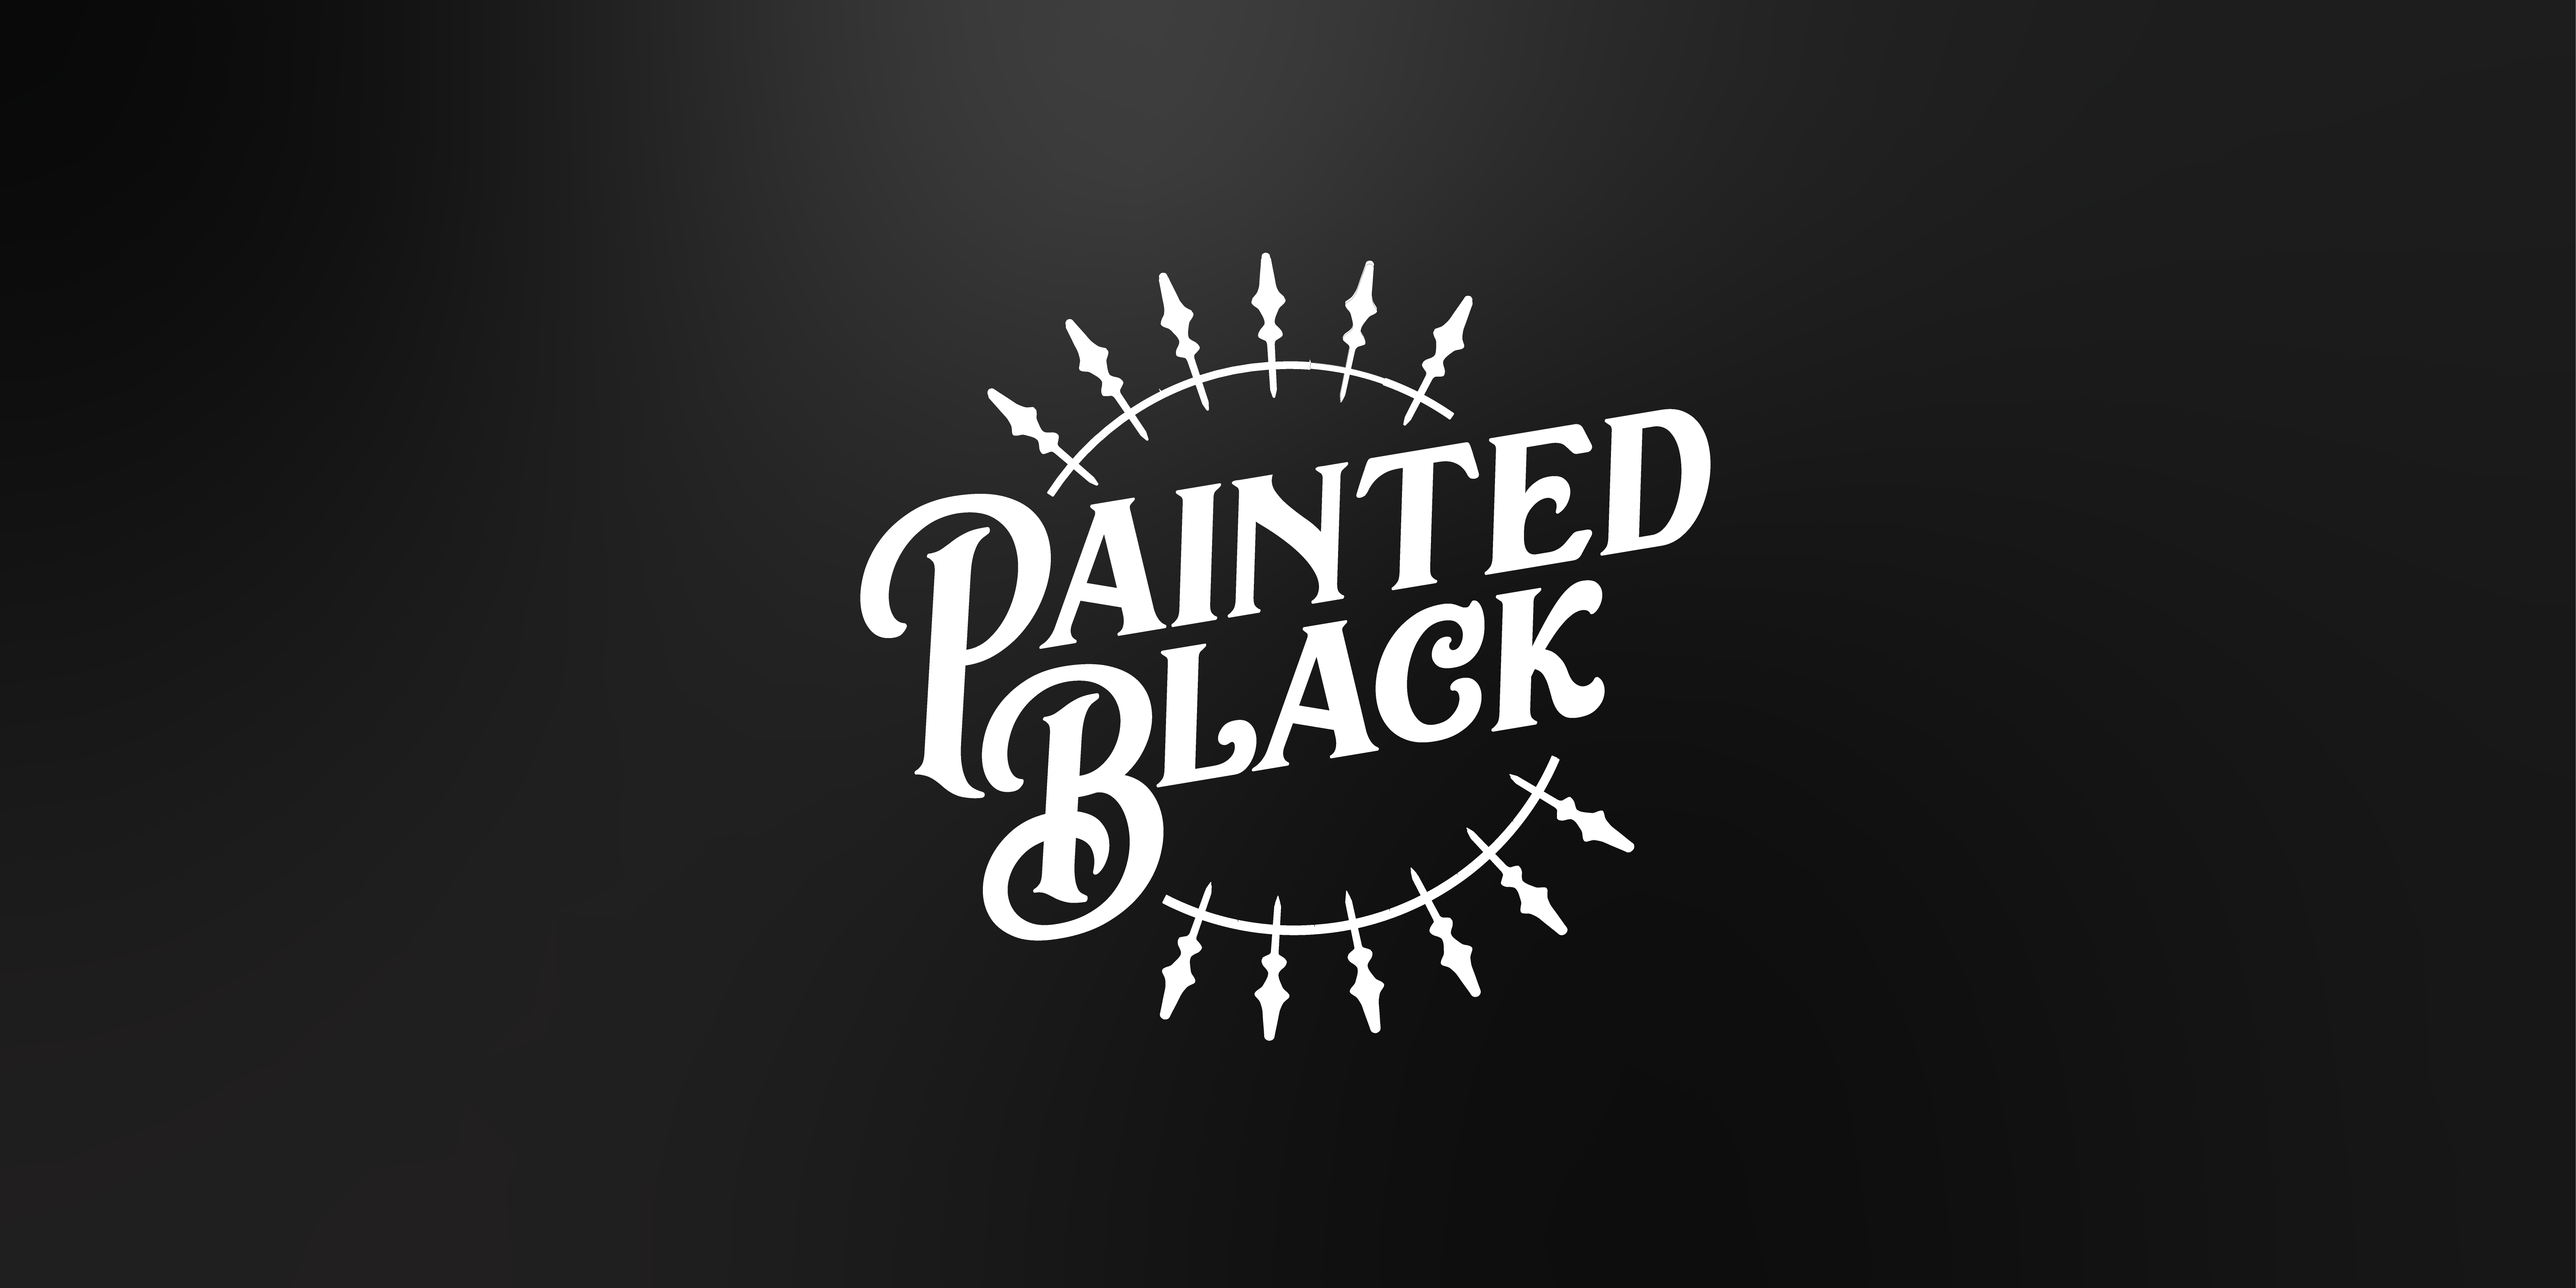 Logo Design and branding for Edinburgh Business, Painted Black